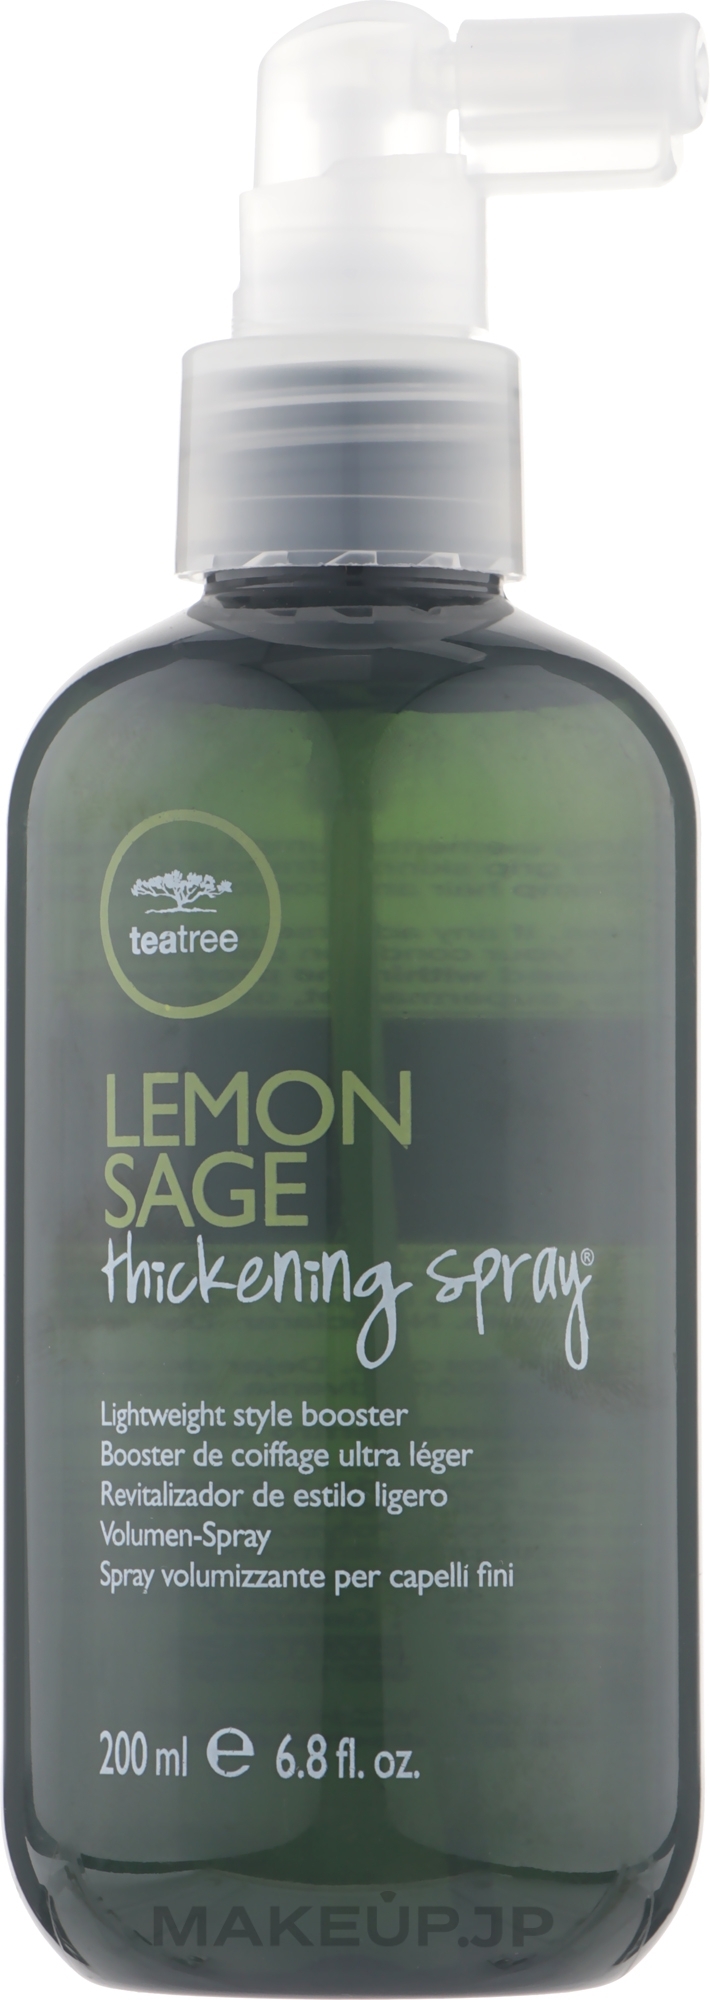 Hair Volume Spray - Paul Mitchell Tea Tree Lemon Sage Thickening Spray — photo 200 ml